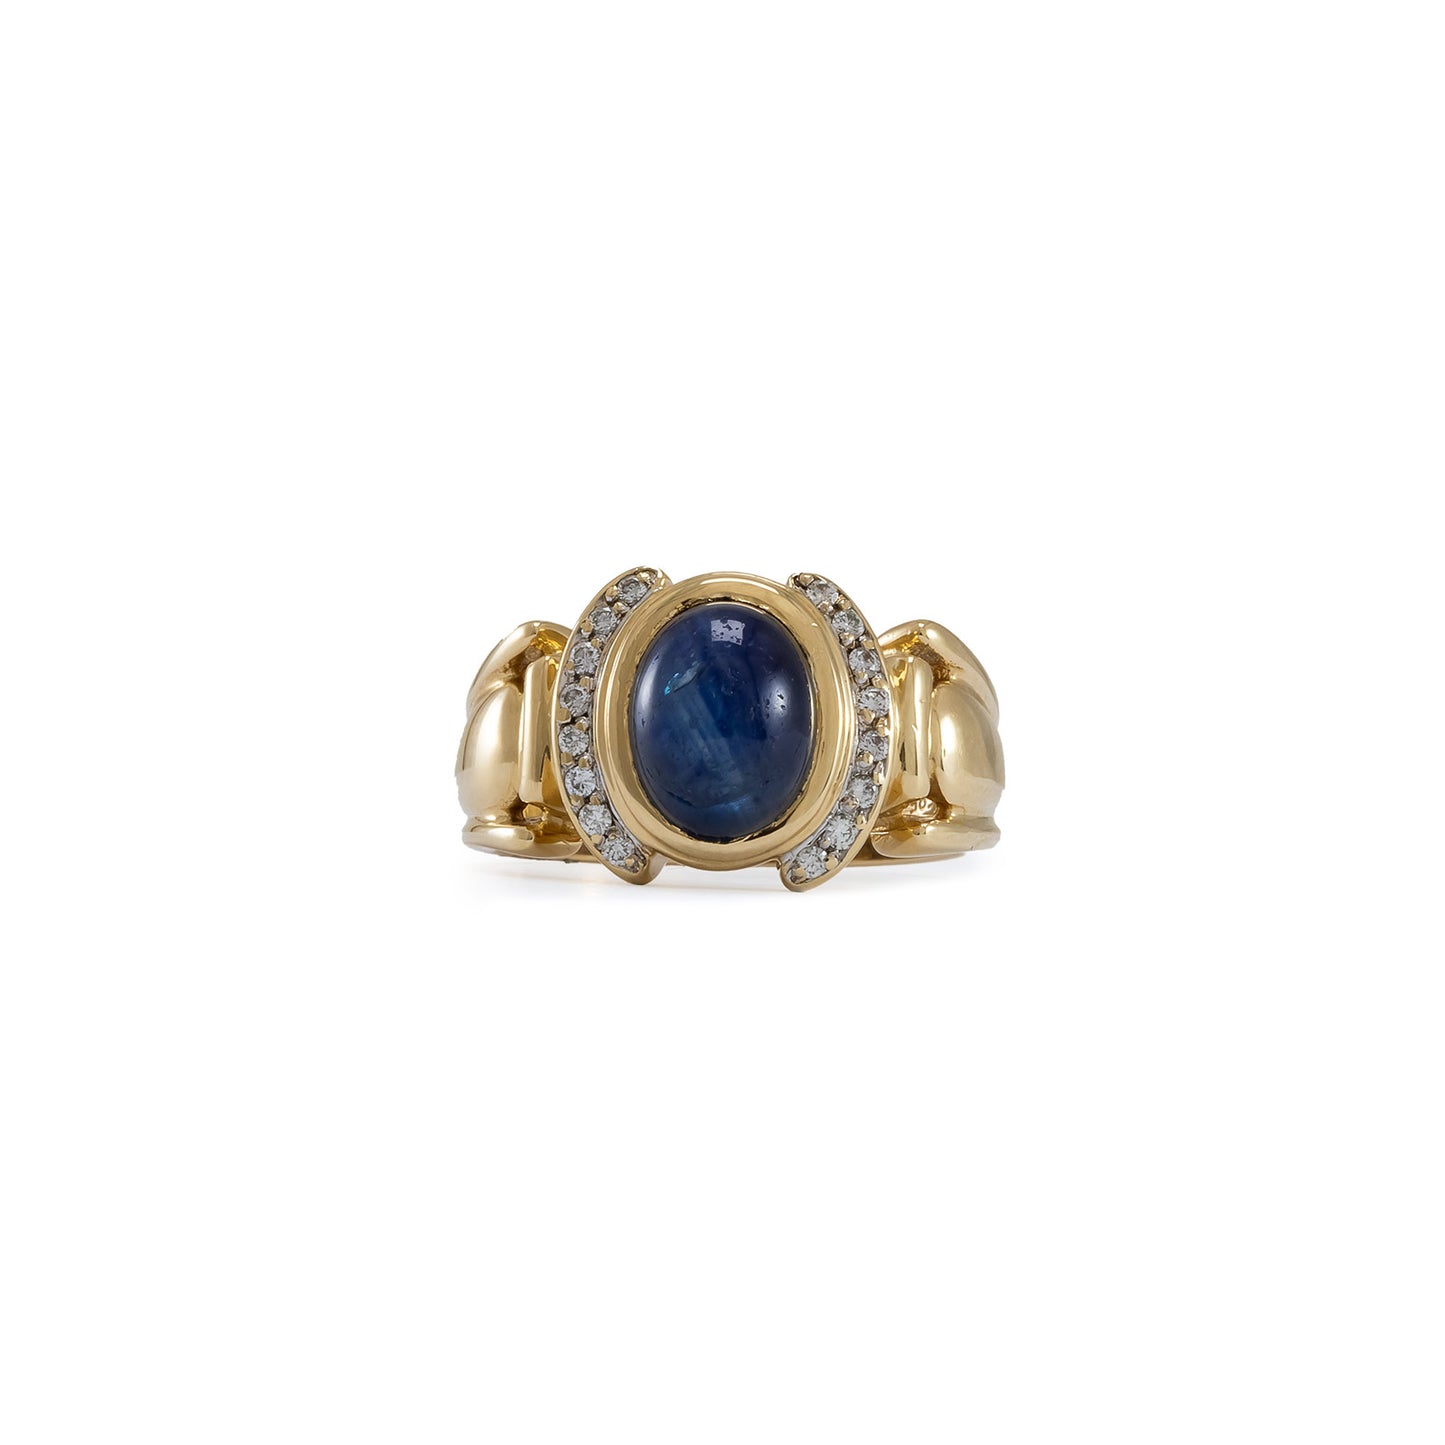 Gemstone ring sapphire diamond yellow gold 14K women's jewelry gold ring gemstone ring